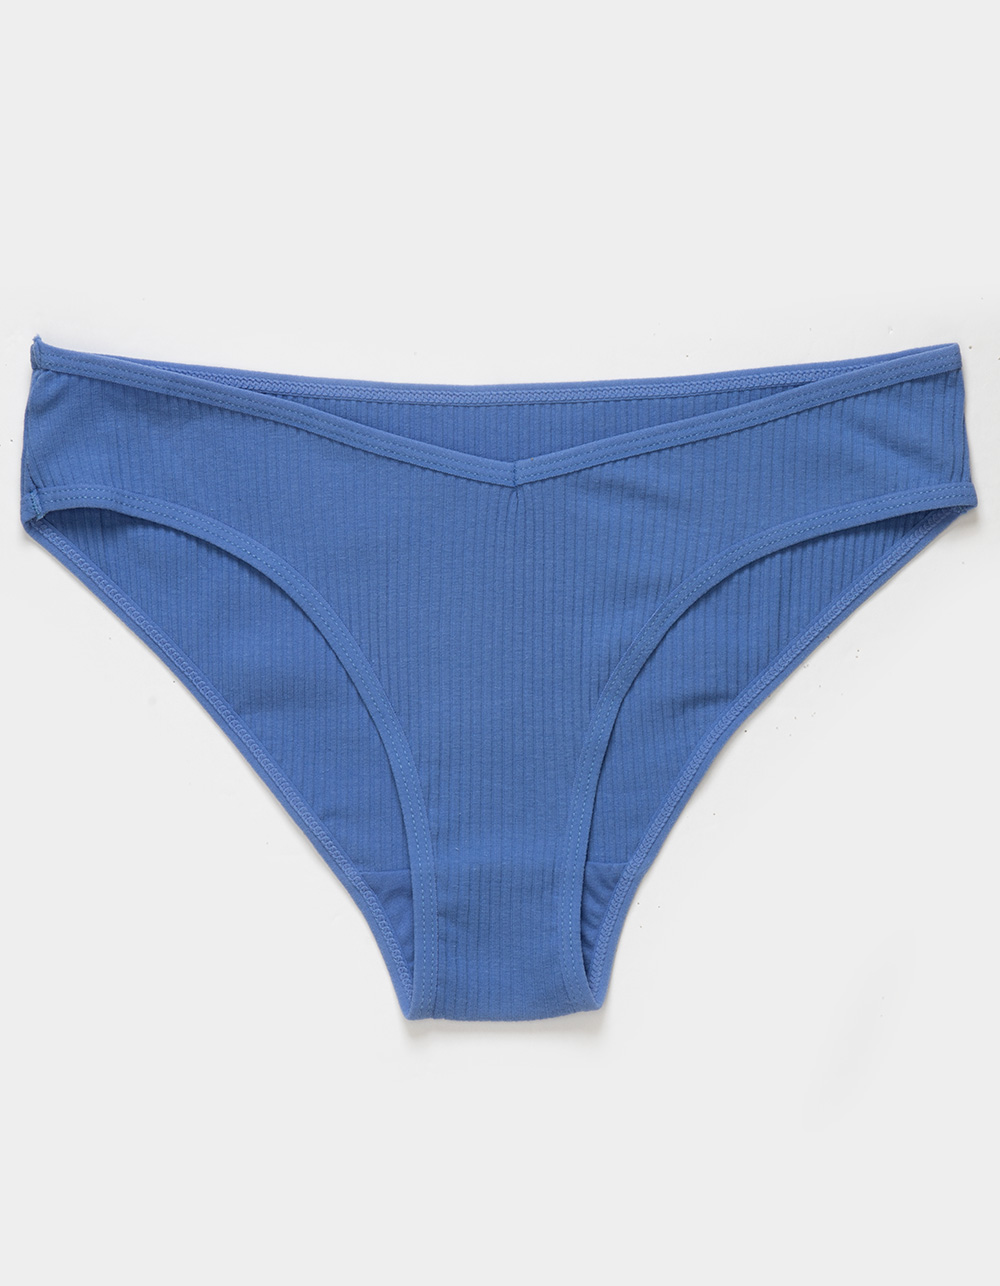 New Hot PLAYBOY Darling Ribbed Panties Women Underwear Panty Blue